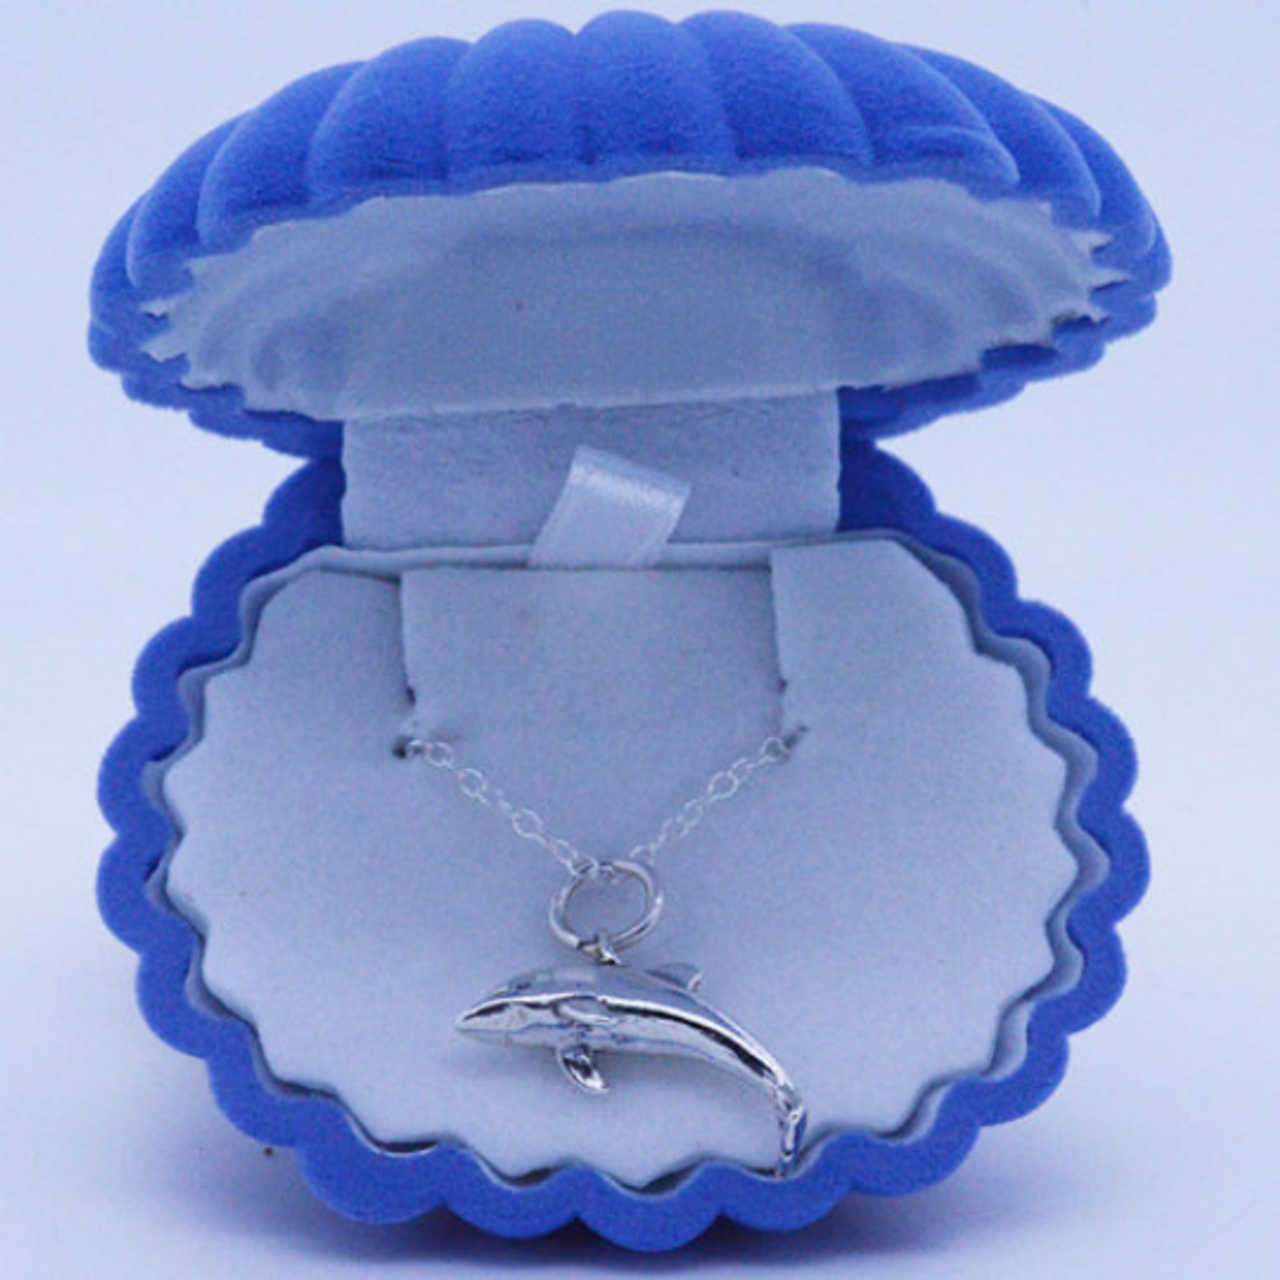 Mako Mermaid Mimmi's Dolphin charm Pendant sterling silver 925